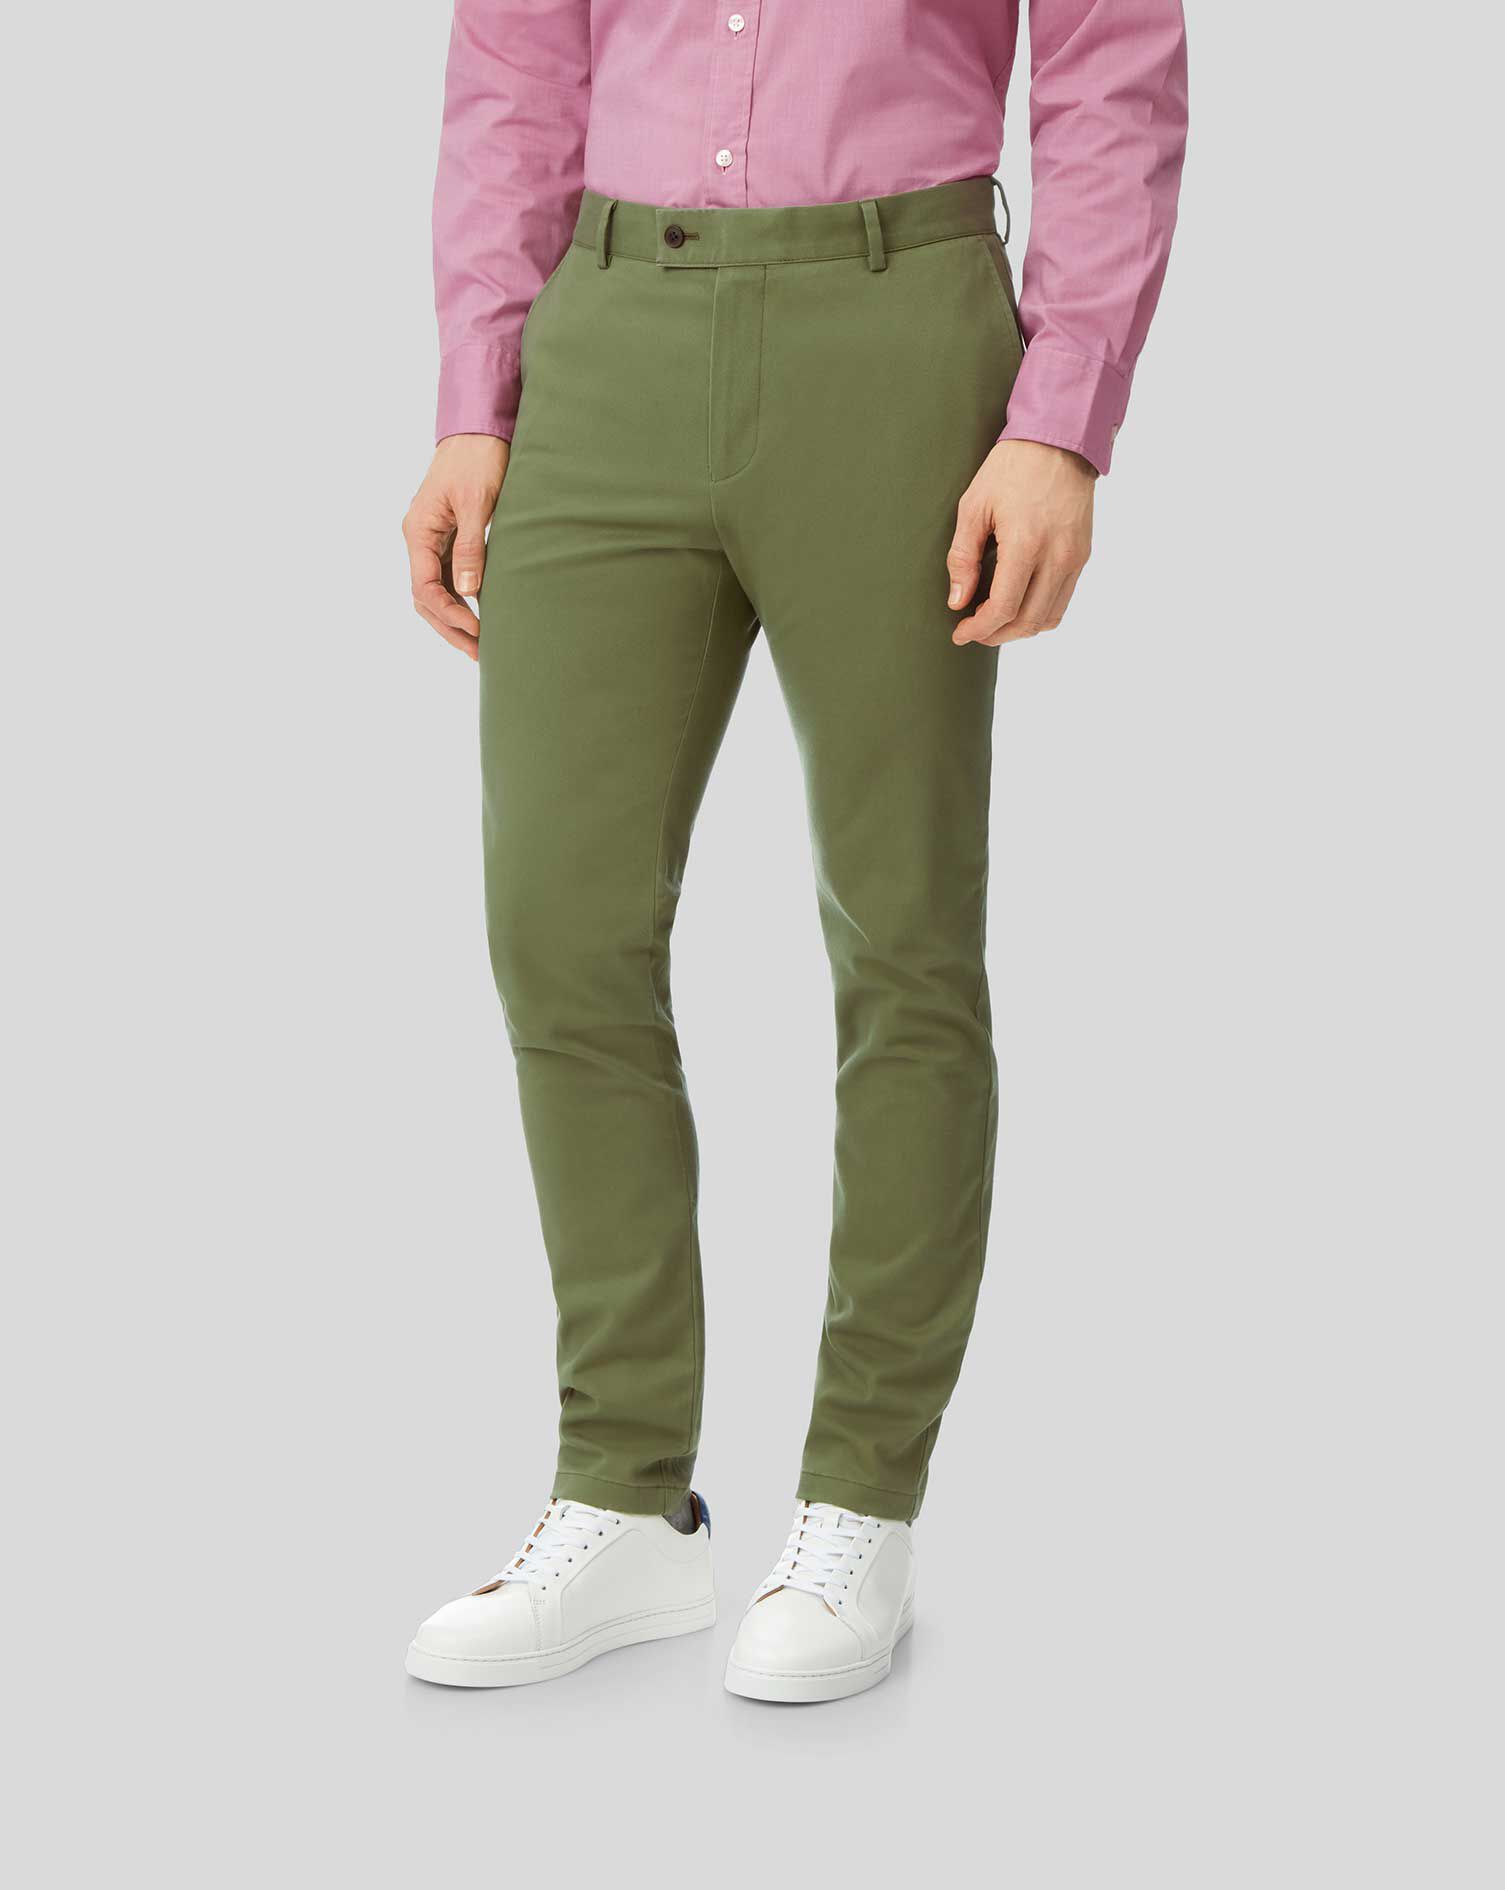 Mens Chinos 30W 34L CHARLES TYRWHITT Dark Green Single Pleat Casual Trousers 